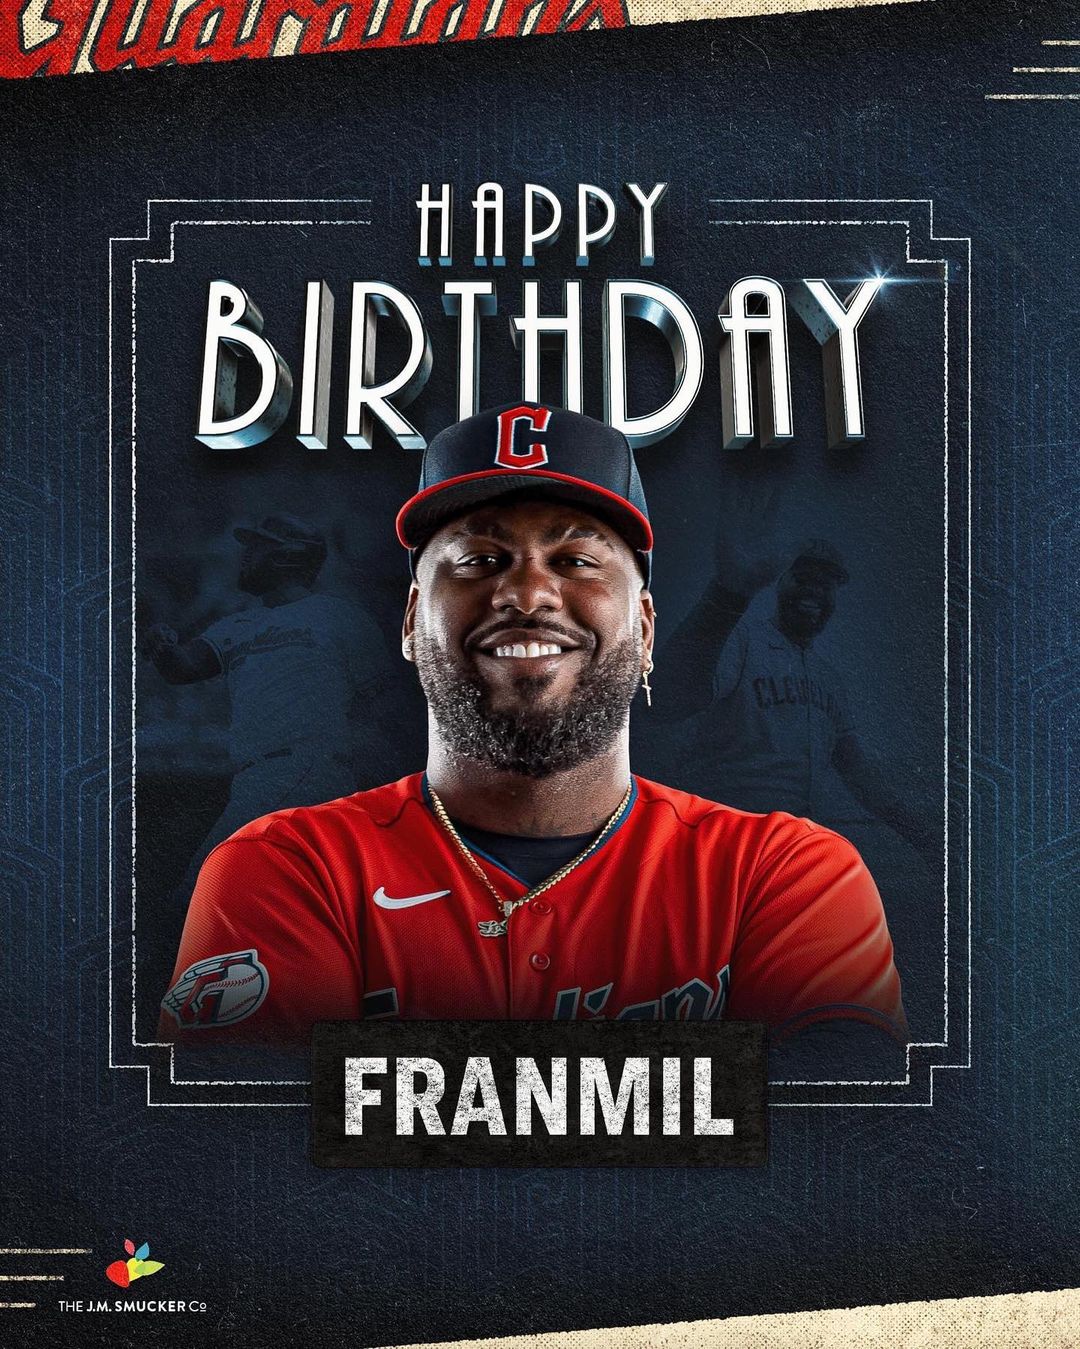 Happy Belated Birthday Franmil!...